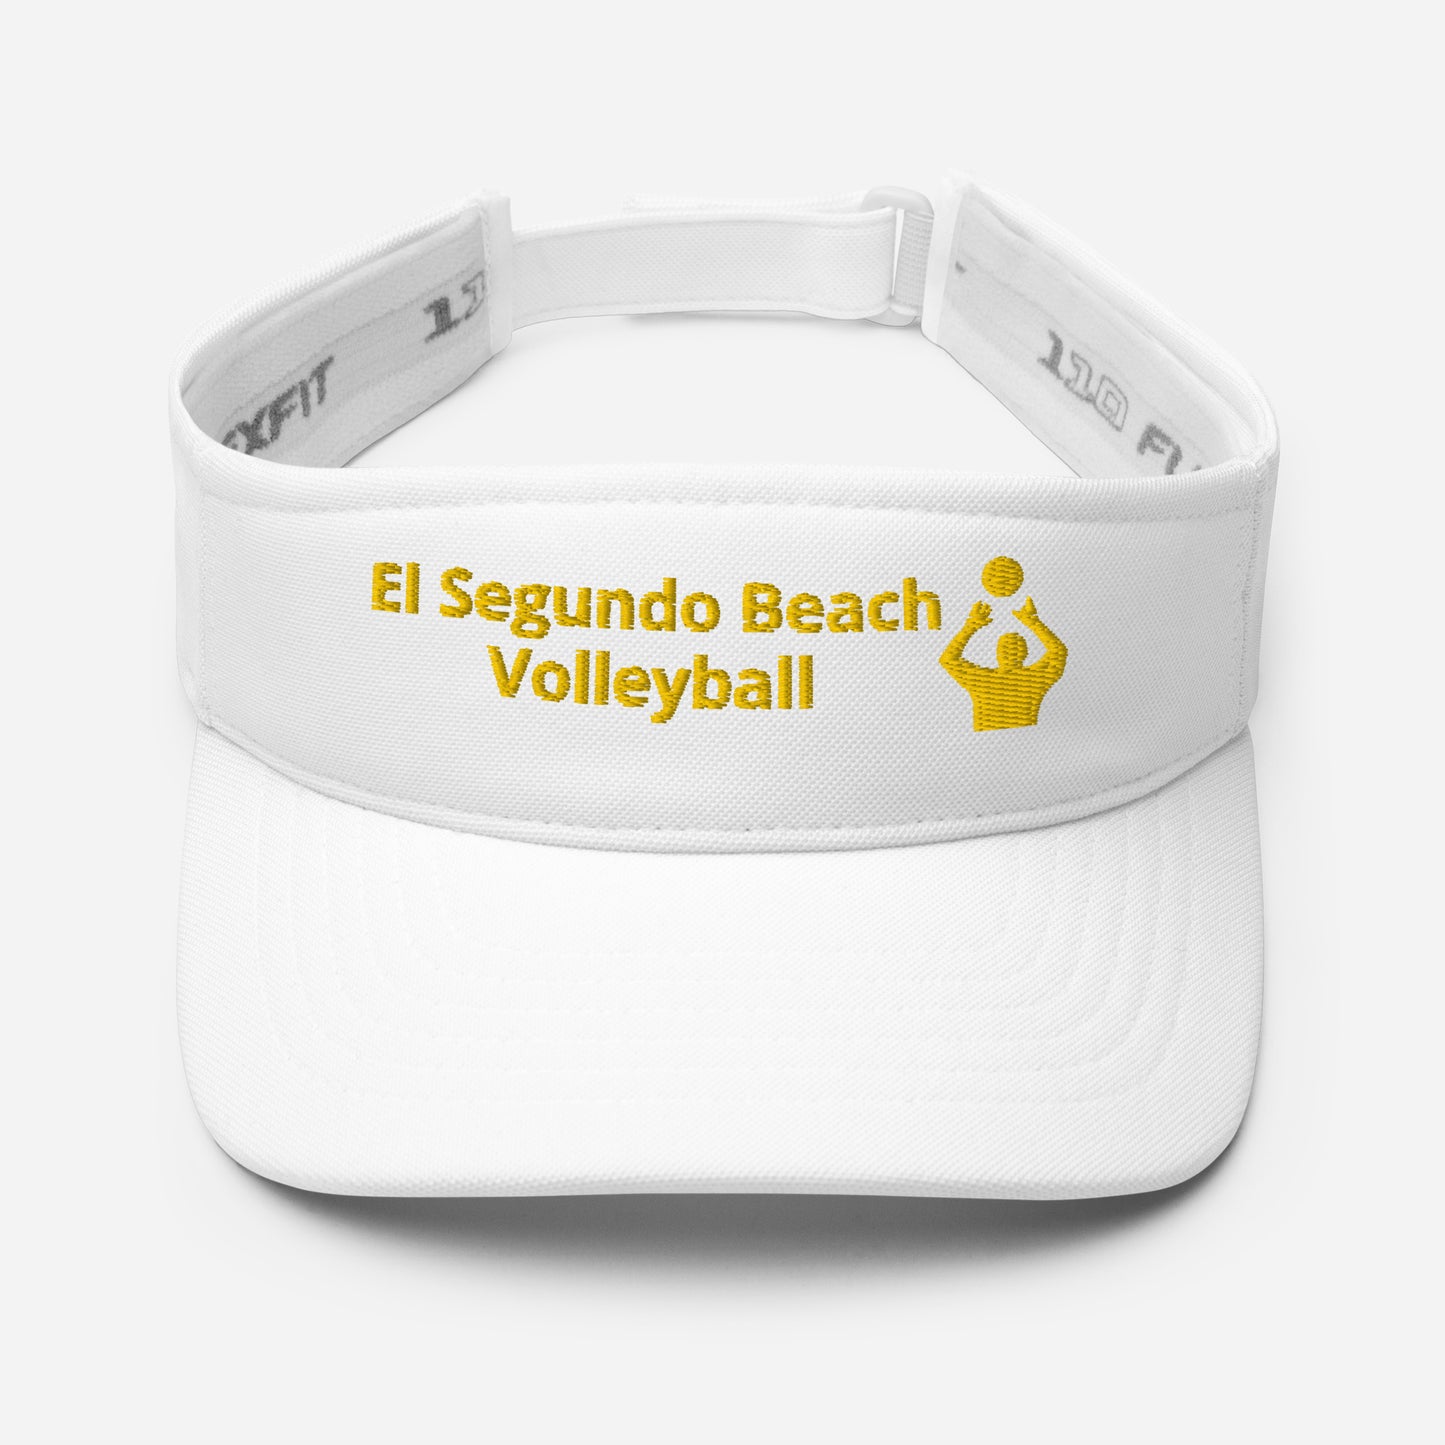 El Segundo Beach Volleyball - Visor